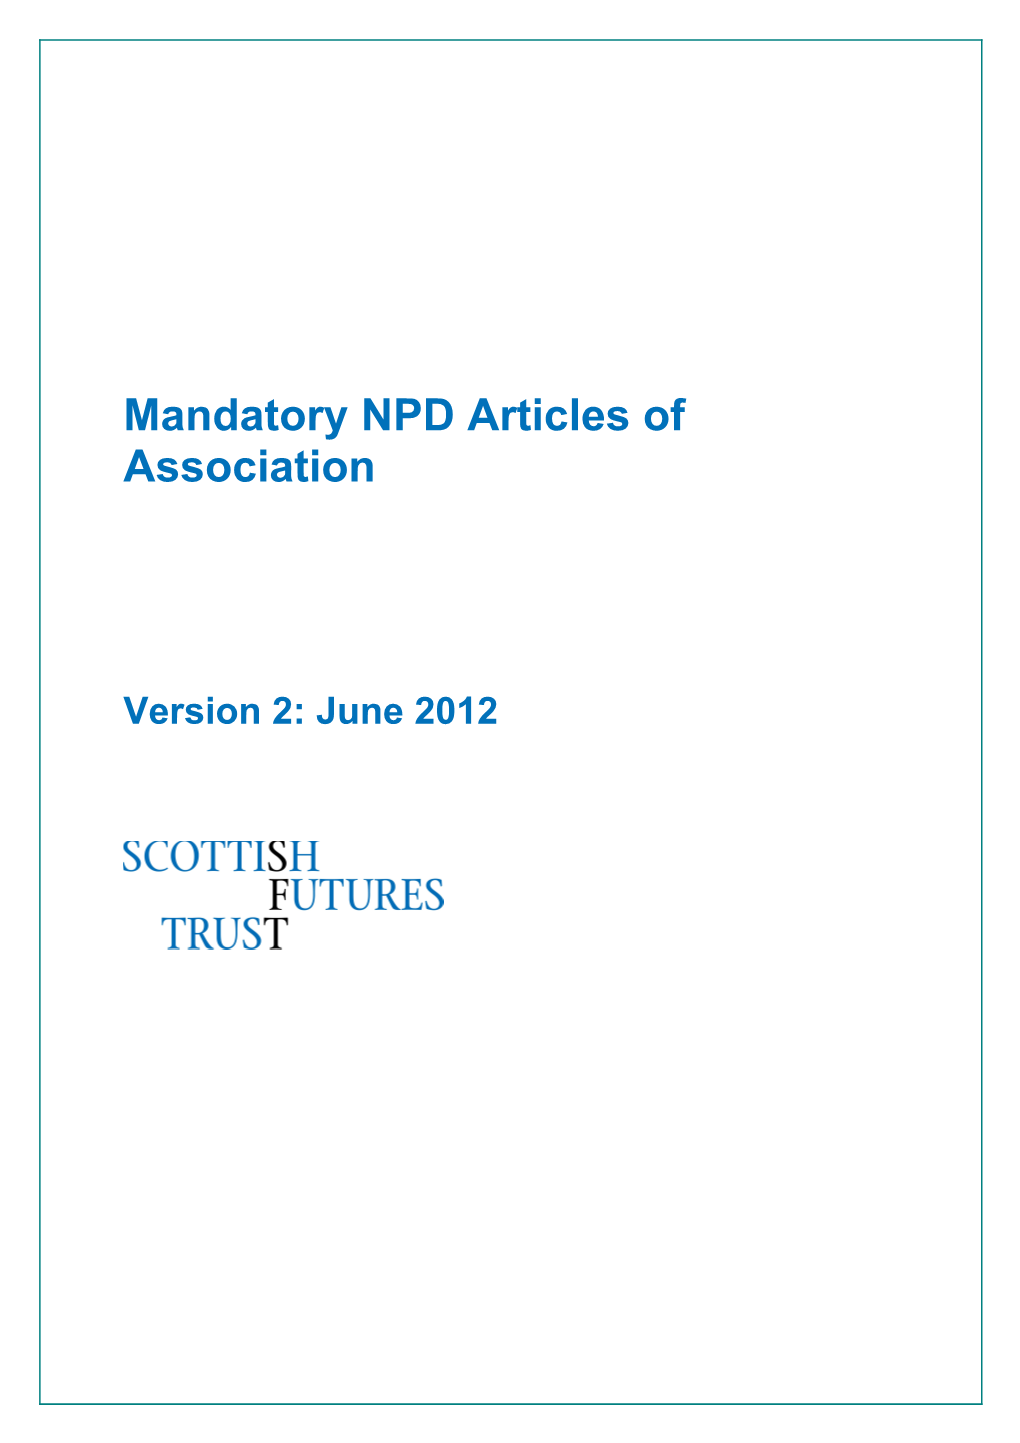 Mandatory NPD Articles of Association